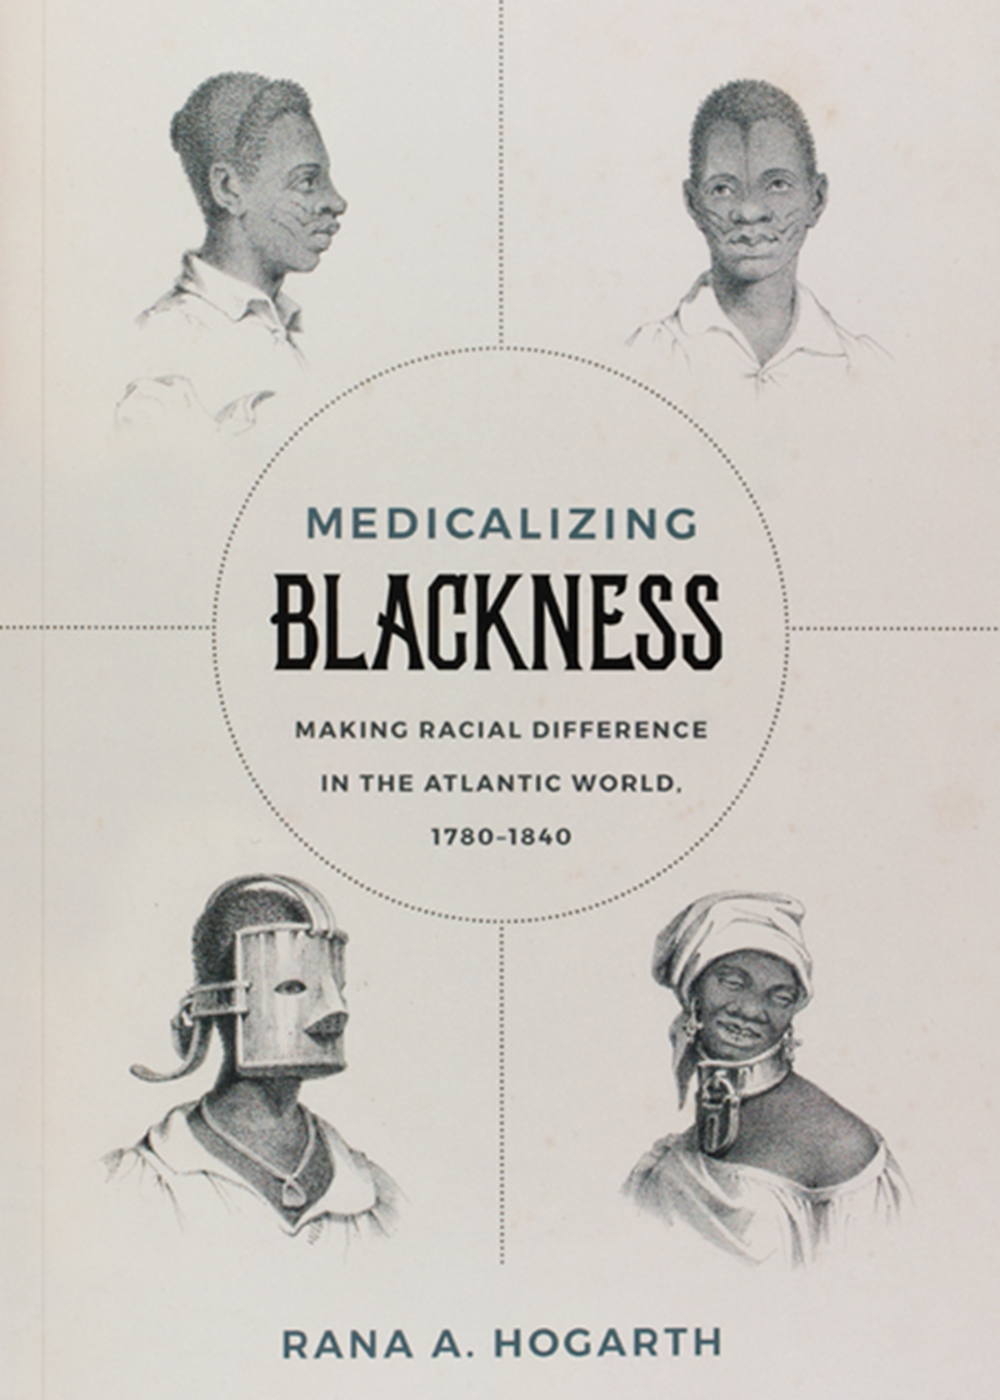 “Medicalizing Blackness” is published by The University of North Carolina Press.